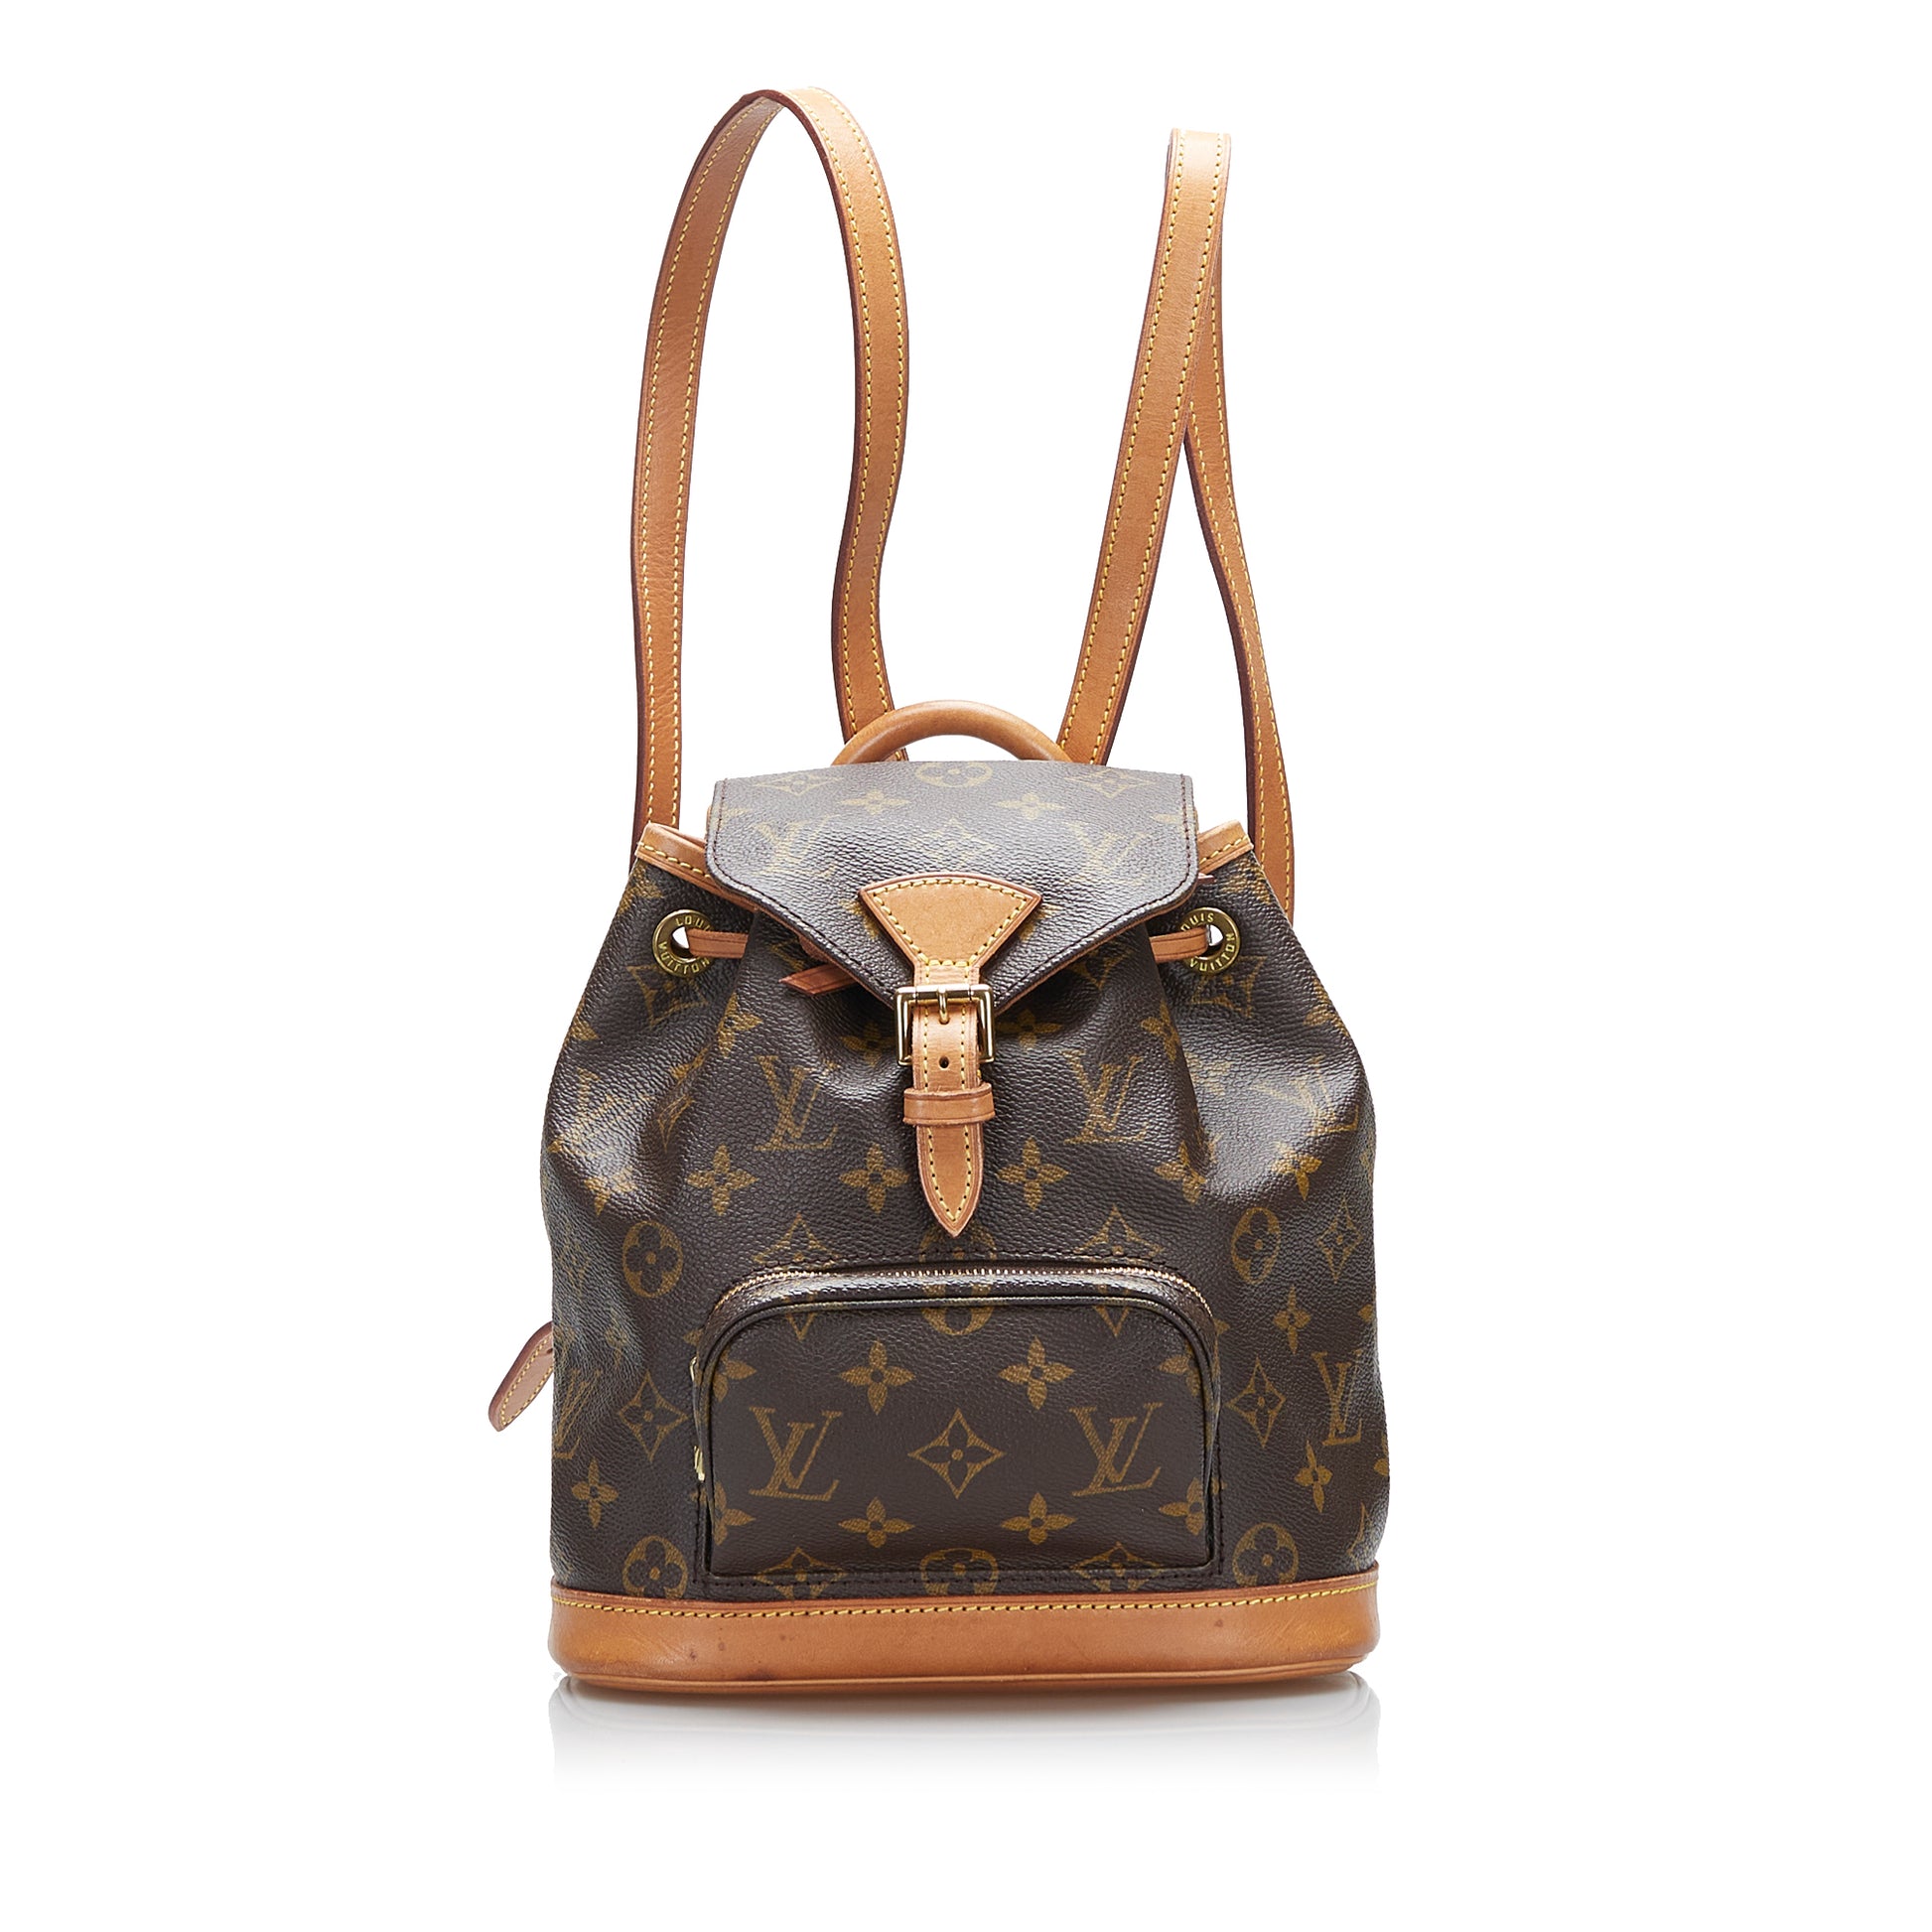 Louis Vuitton Montsouris Mm Backpack 56% off retail  Brown leather backpack,  Louis vuitton, Leather backpack